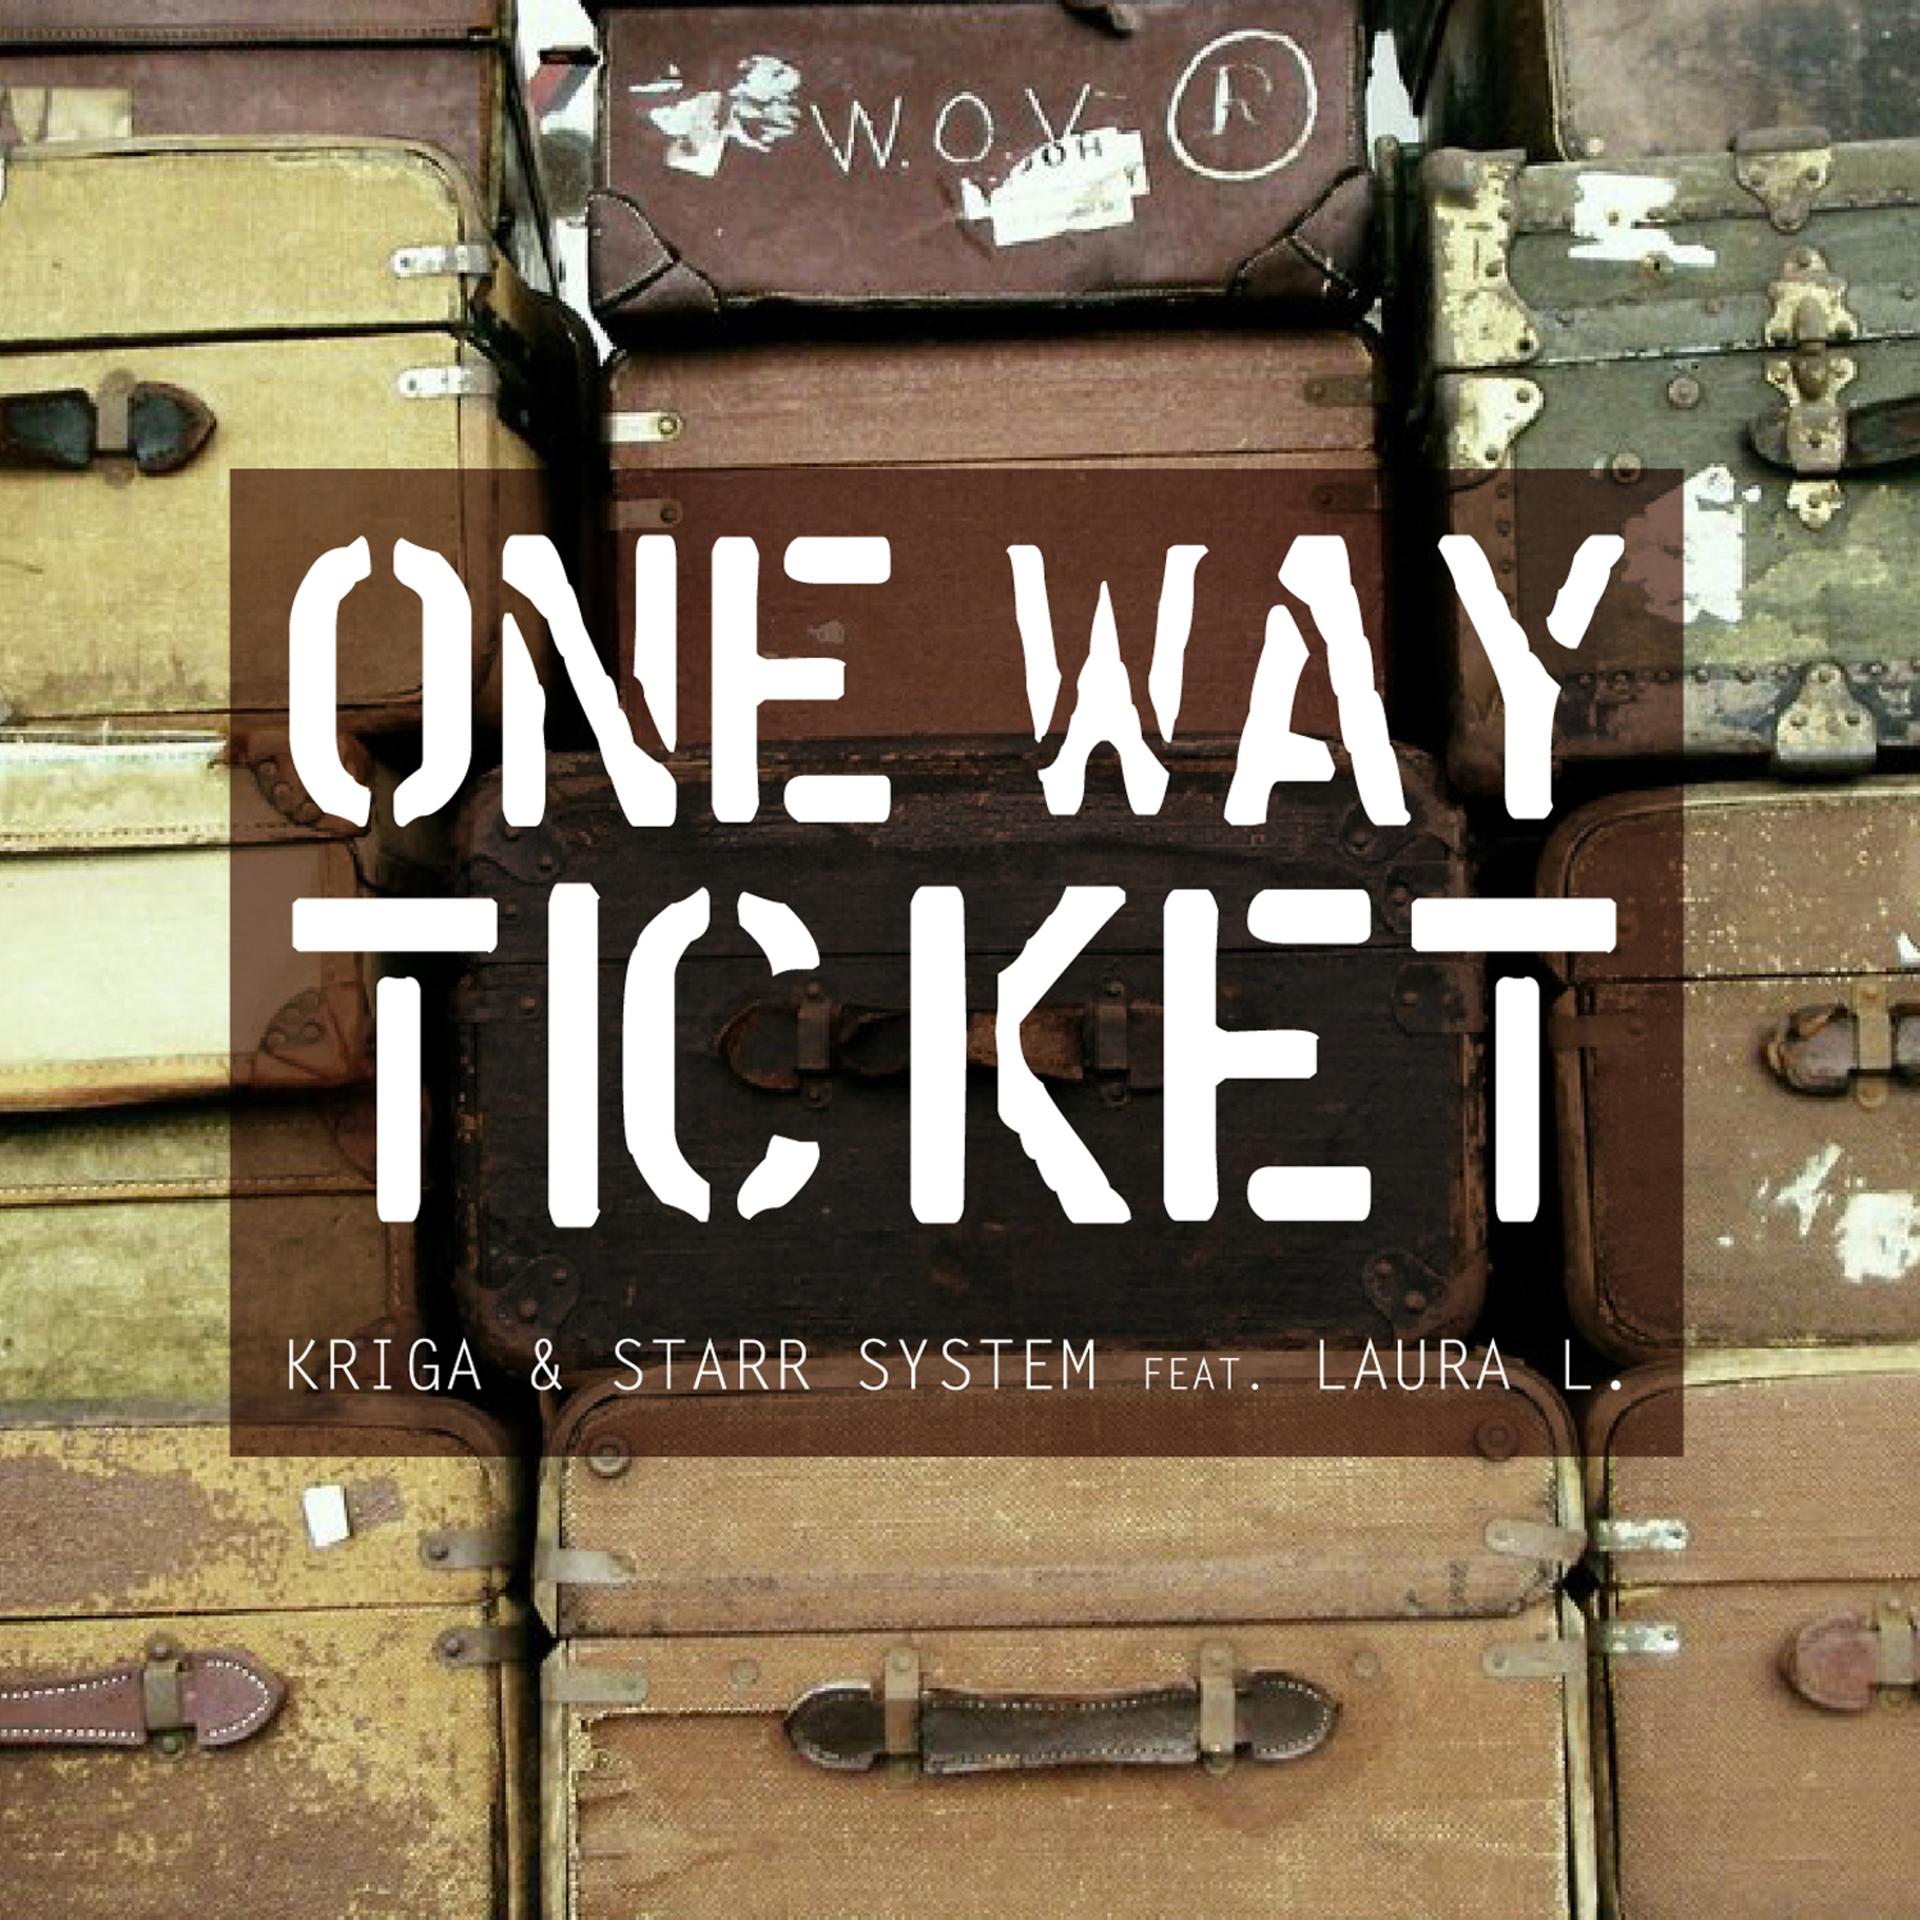 On one s way. One way ticket. One way System обложка. Kriga & Laura ĺ.. One way ticket обложка.